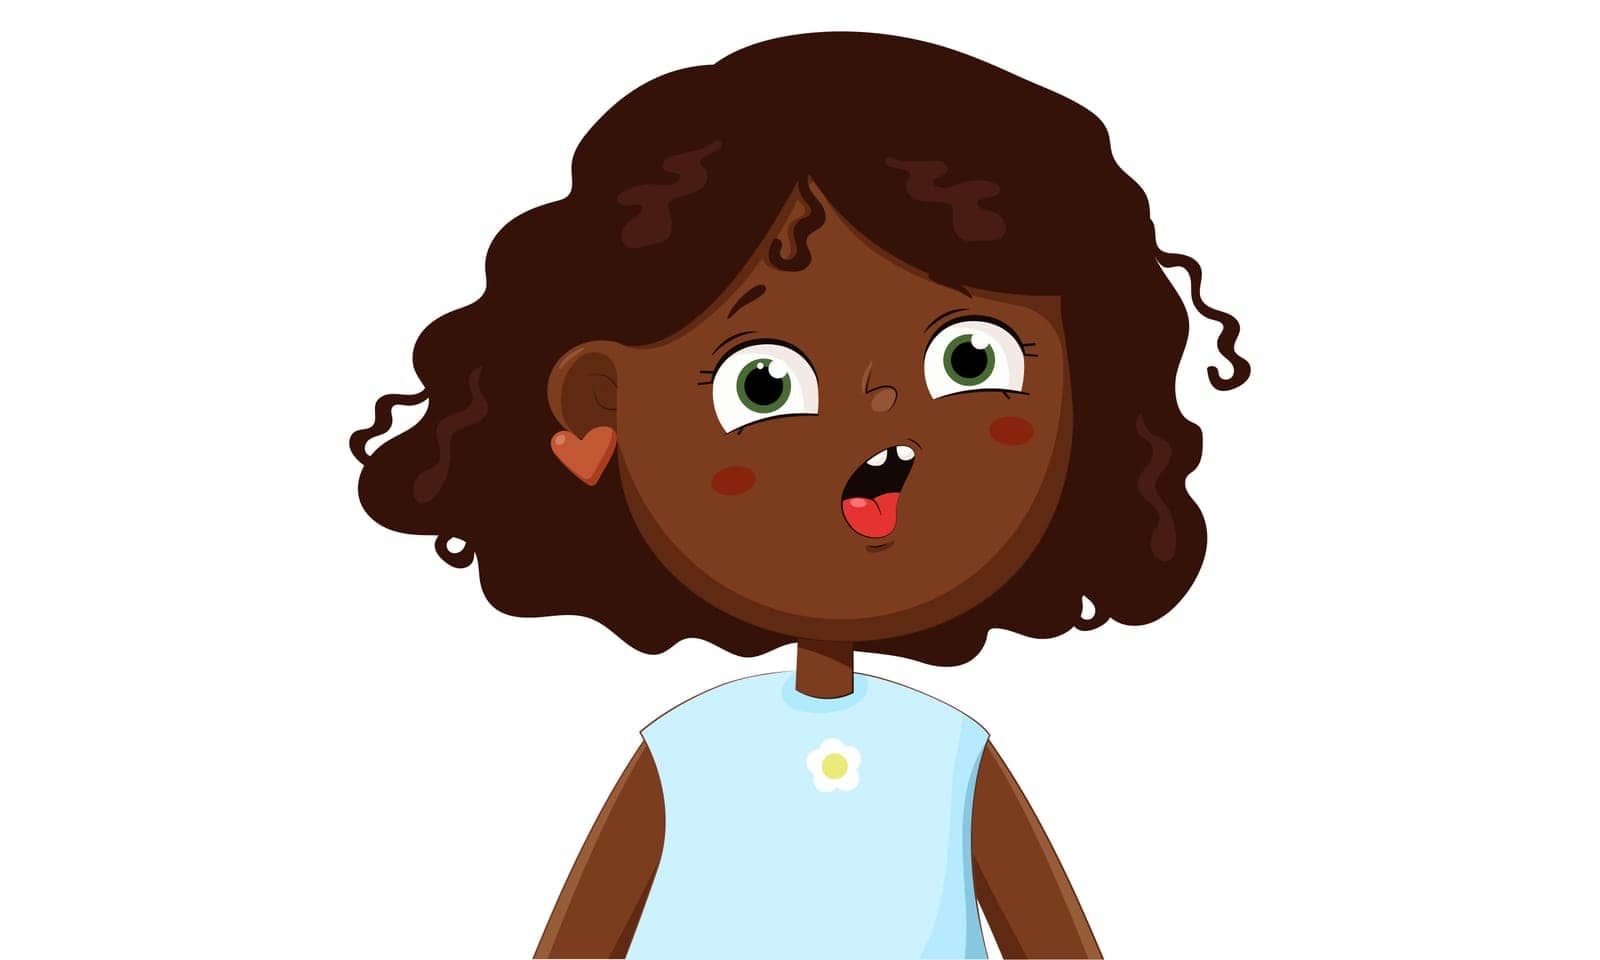 Amazed Funny Little Black skin Girl Cartoon Character Illustration.Suprised cute child isolated white backround.Vector illustration.